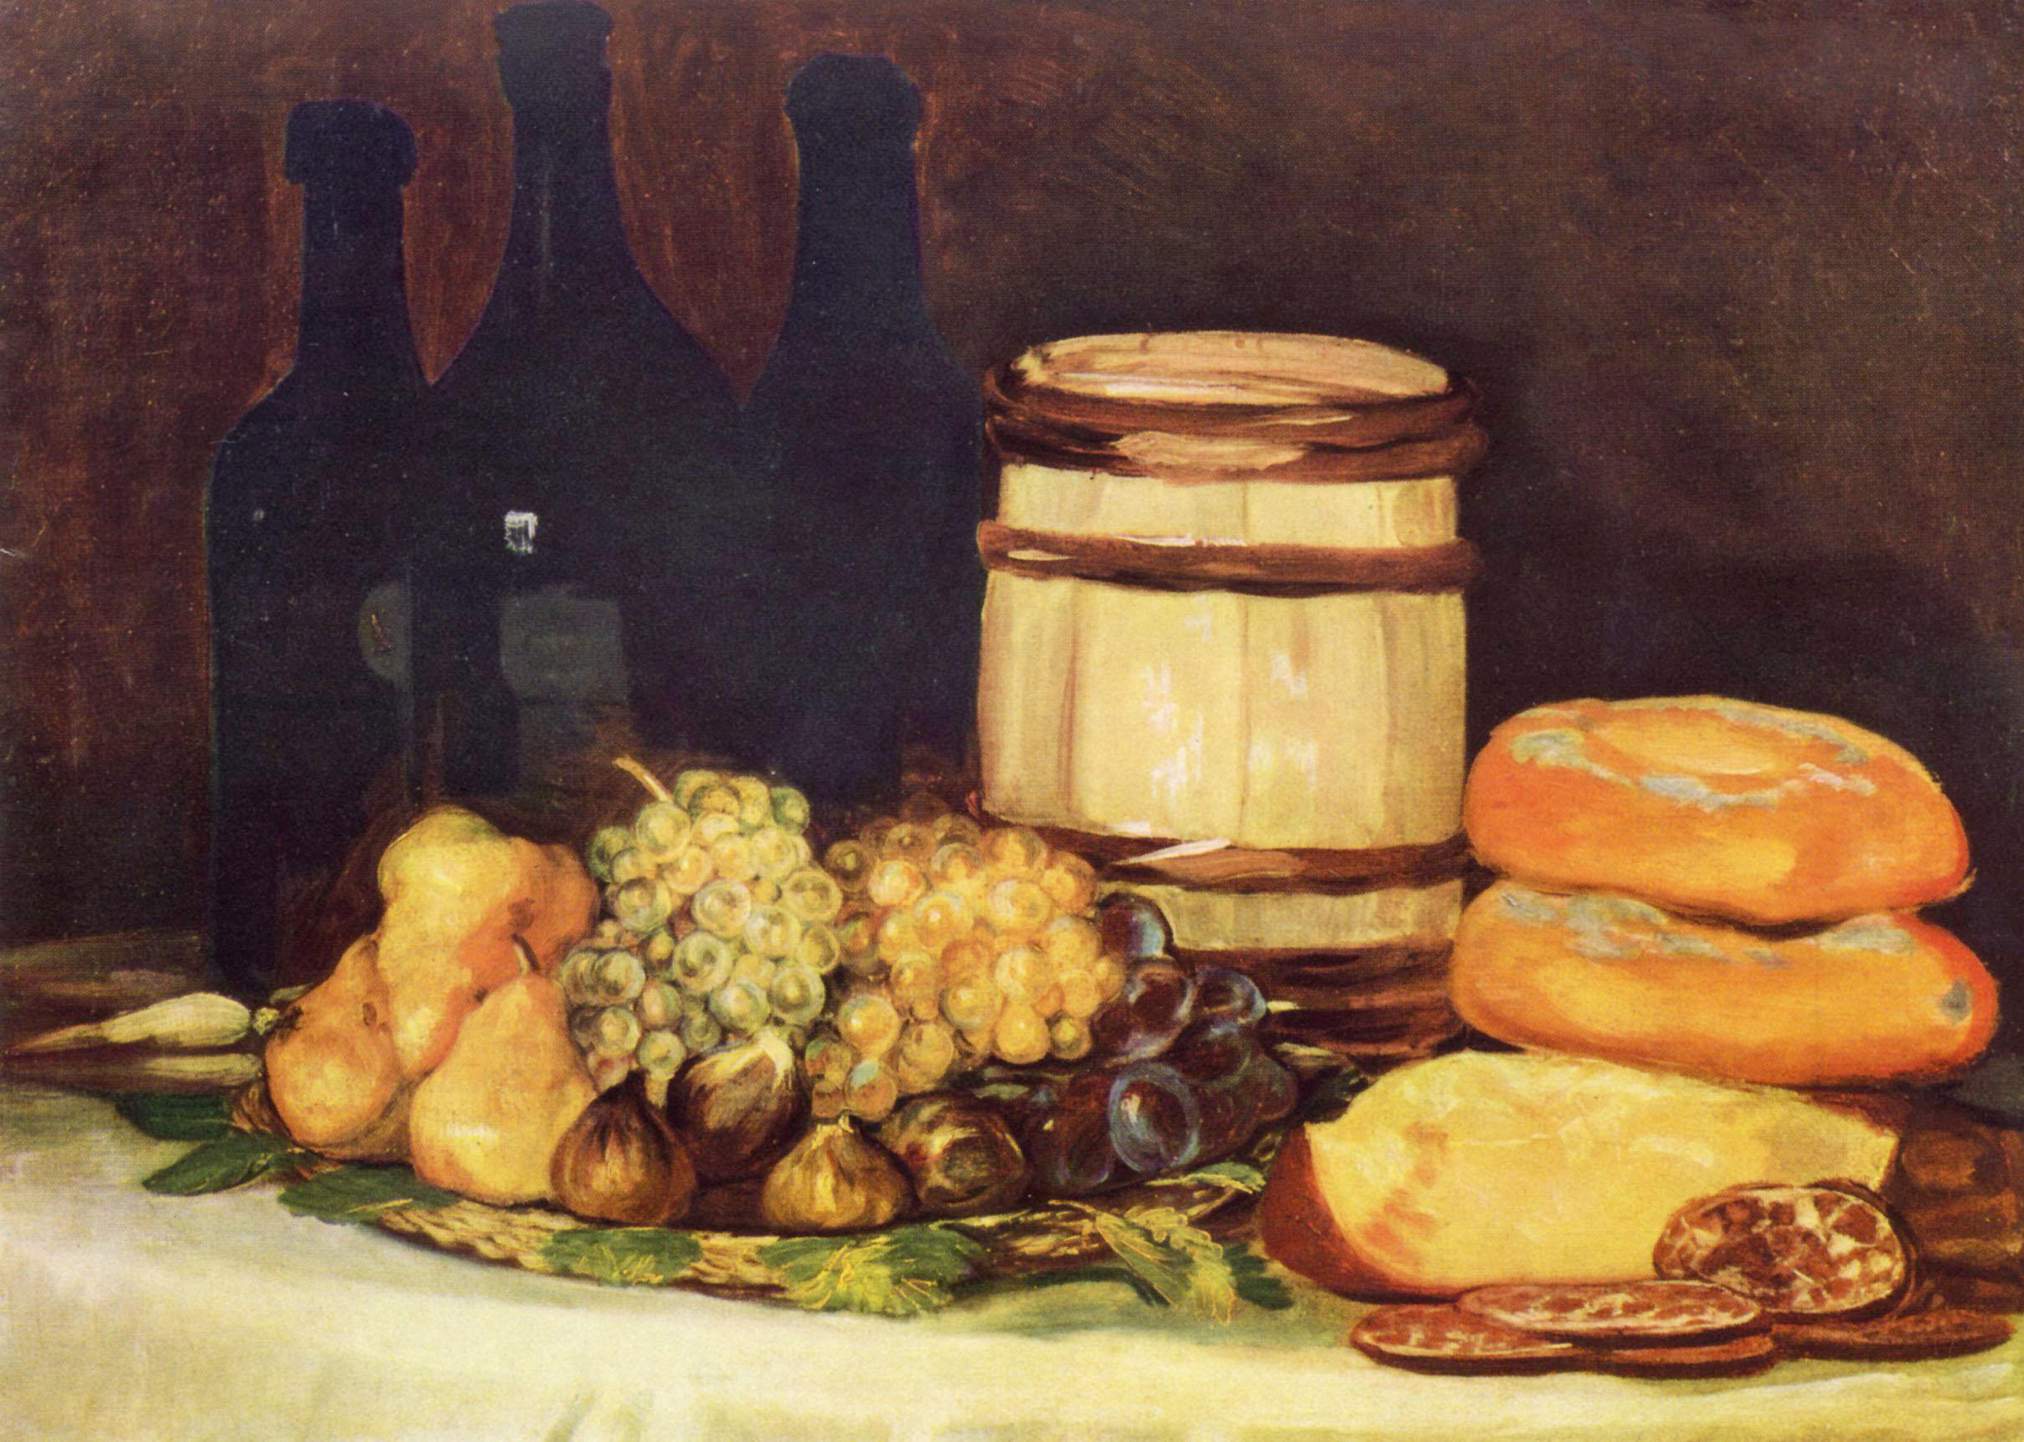 Still life with fruit, bottles, breads (1826).